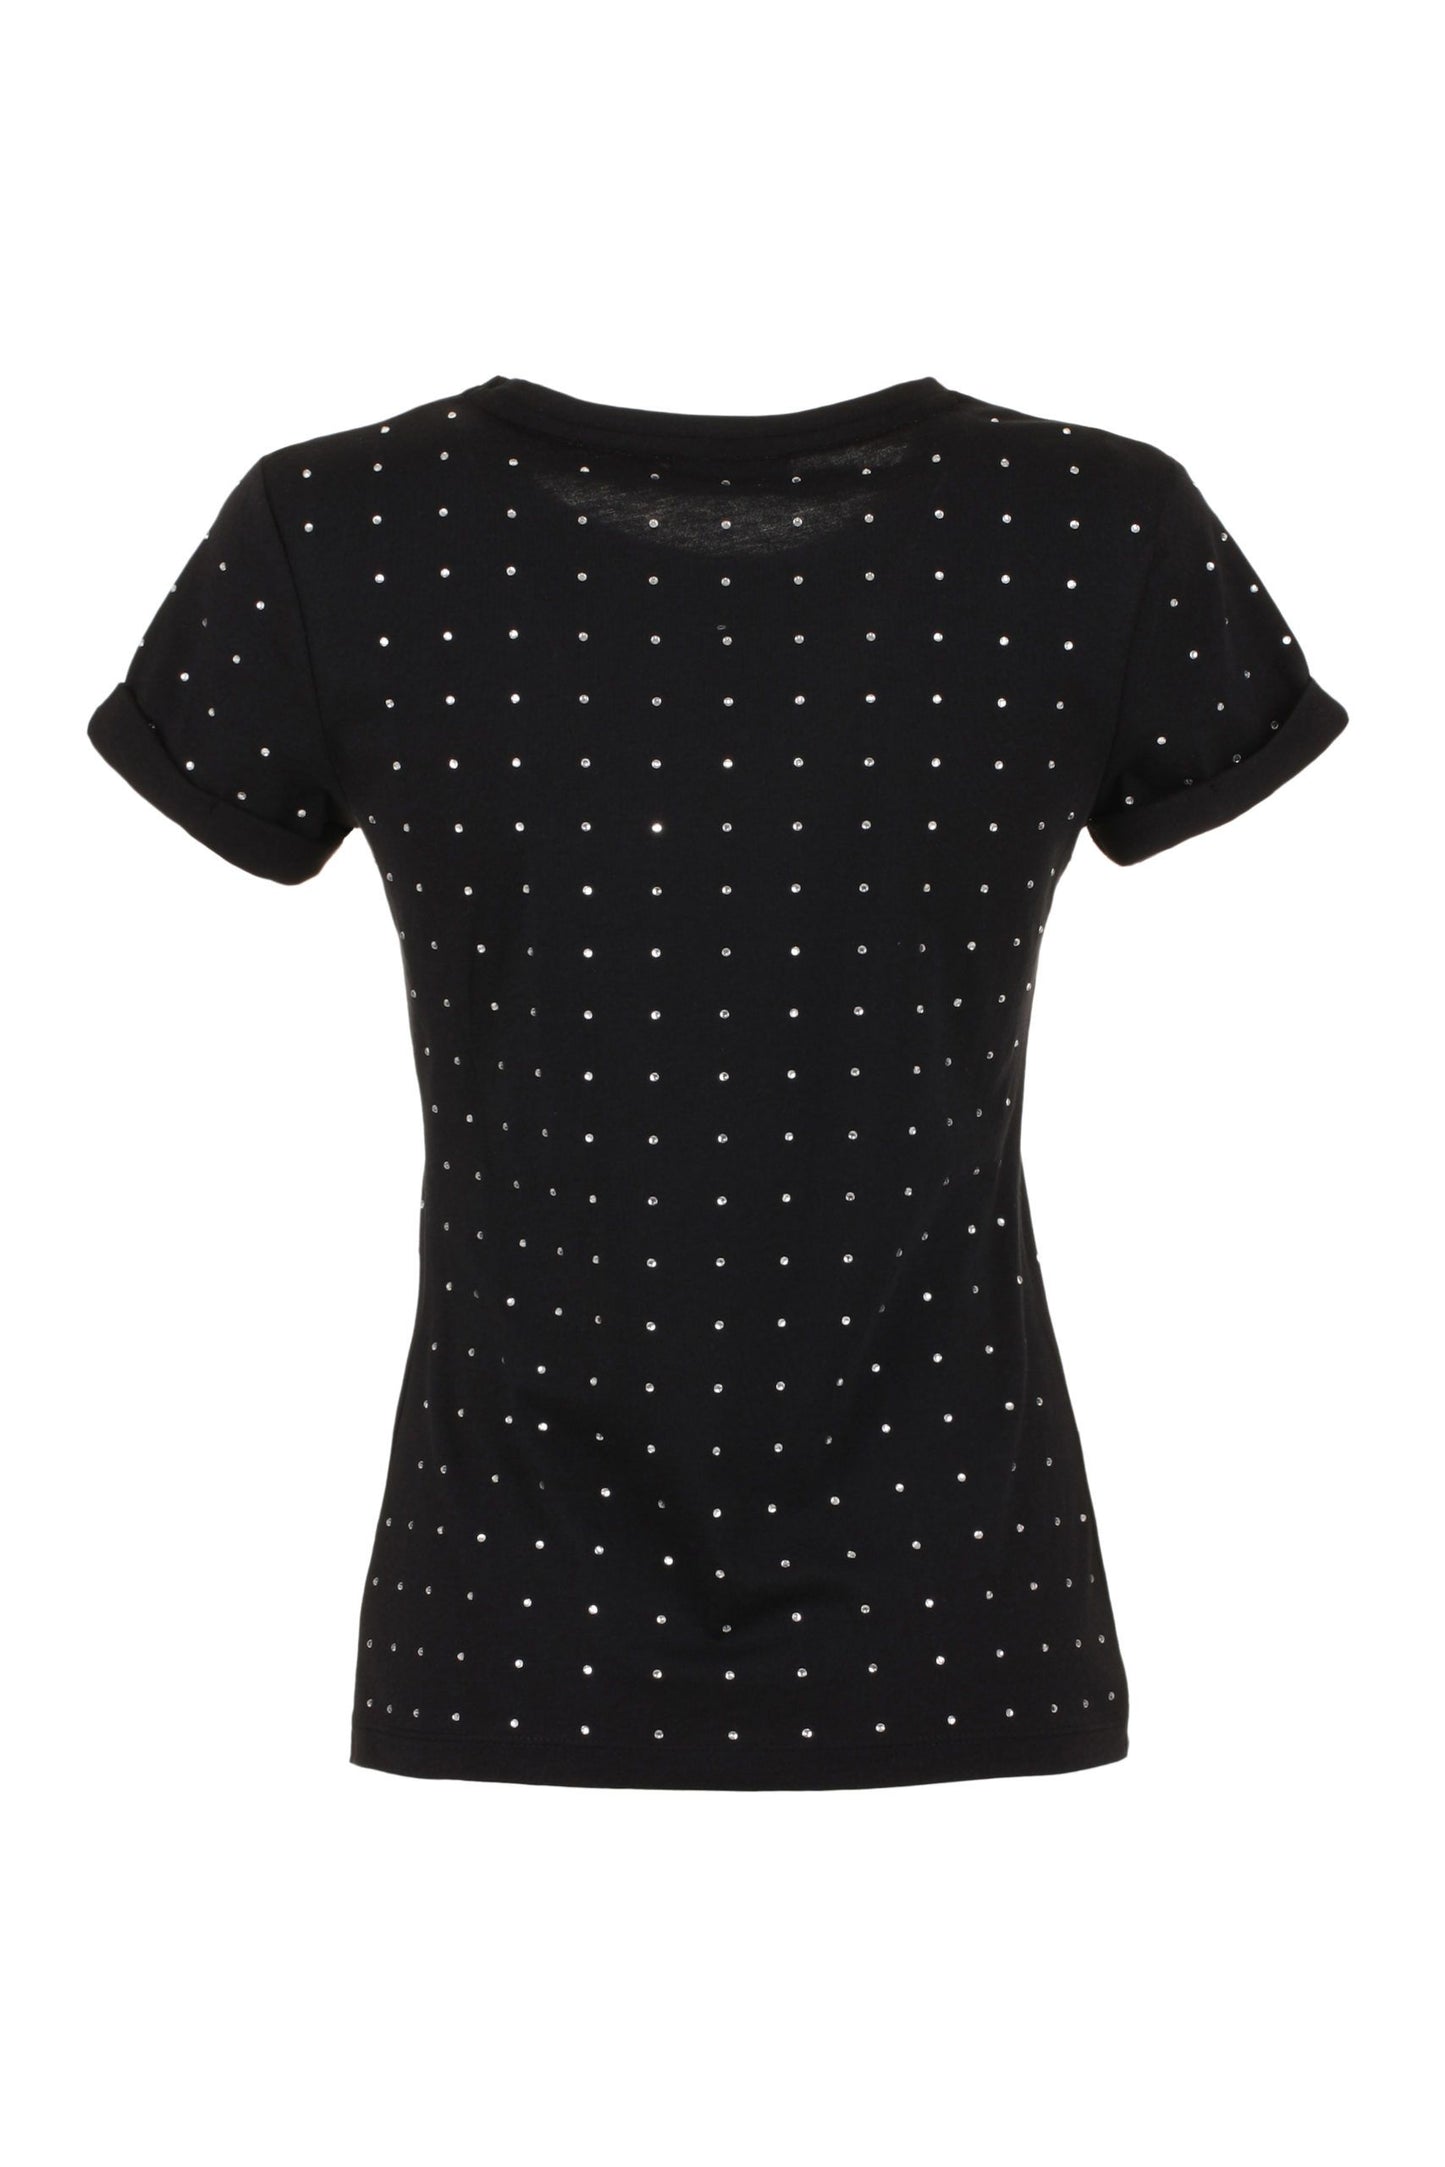 Imperfect Black Cotton Tops & T-Shirt